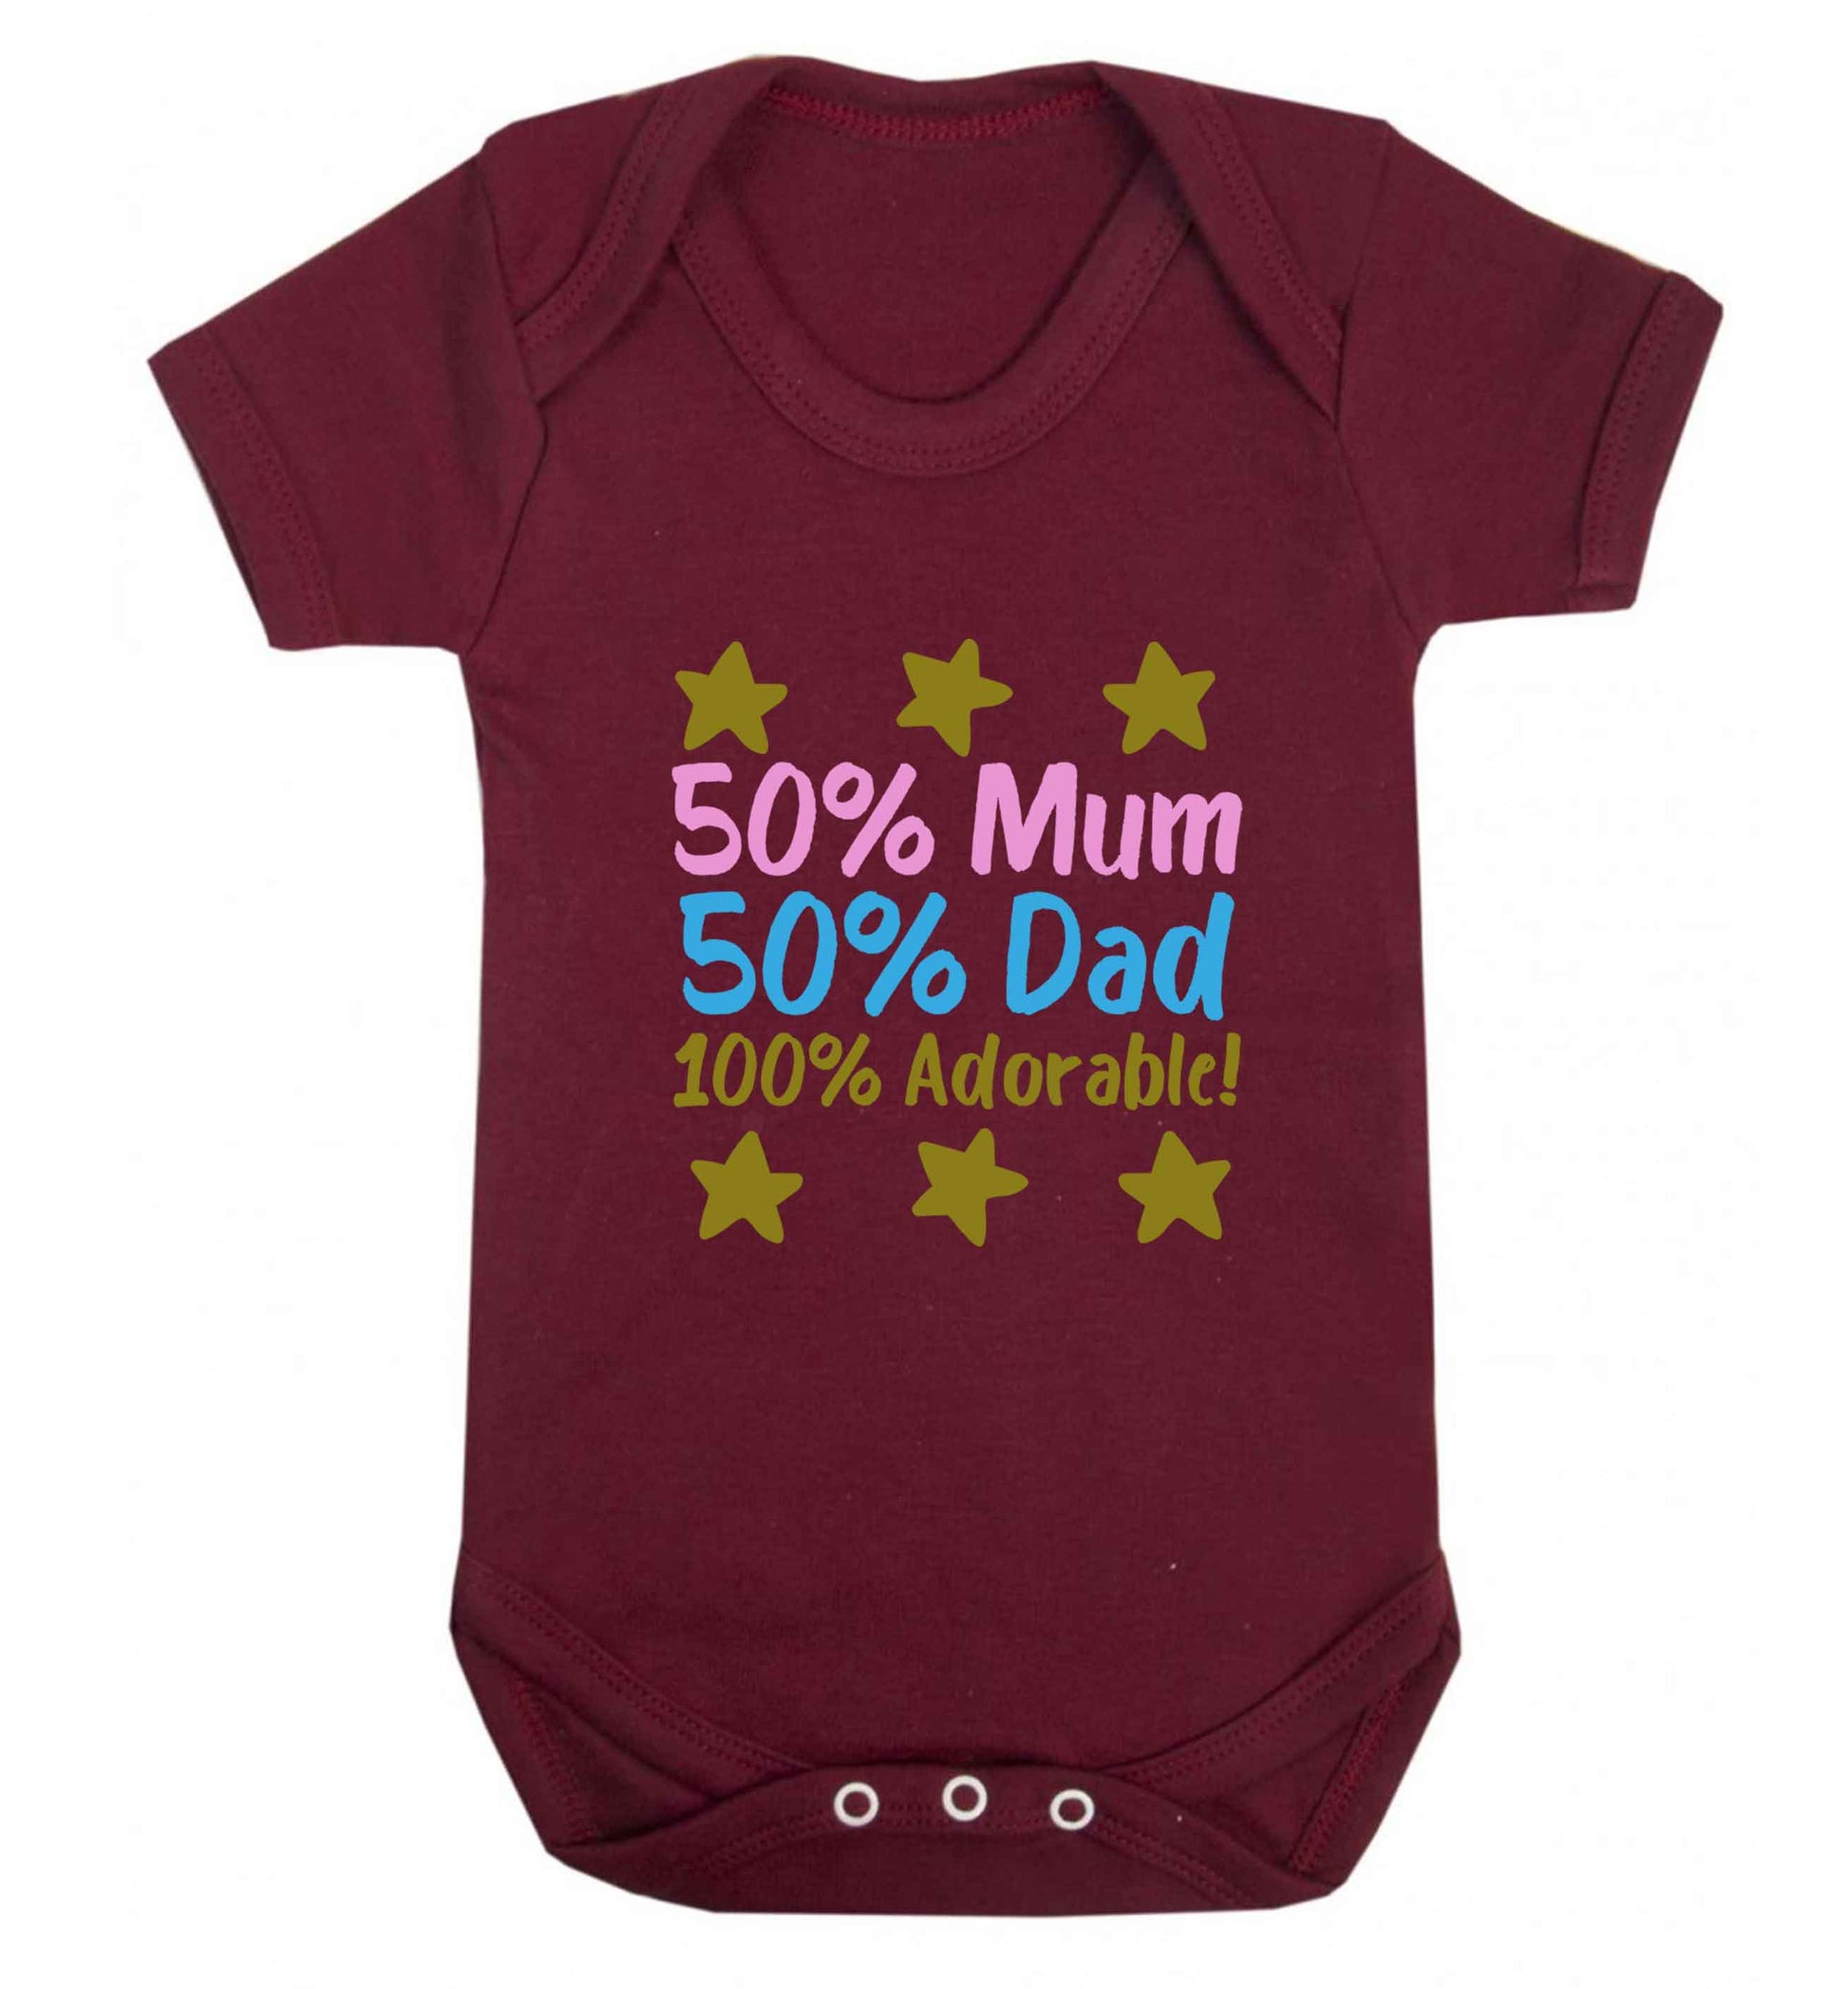 50% mum 50% dad 100% adorable baby vest maroon 18-24 months